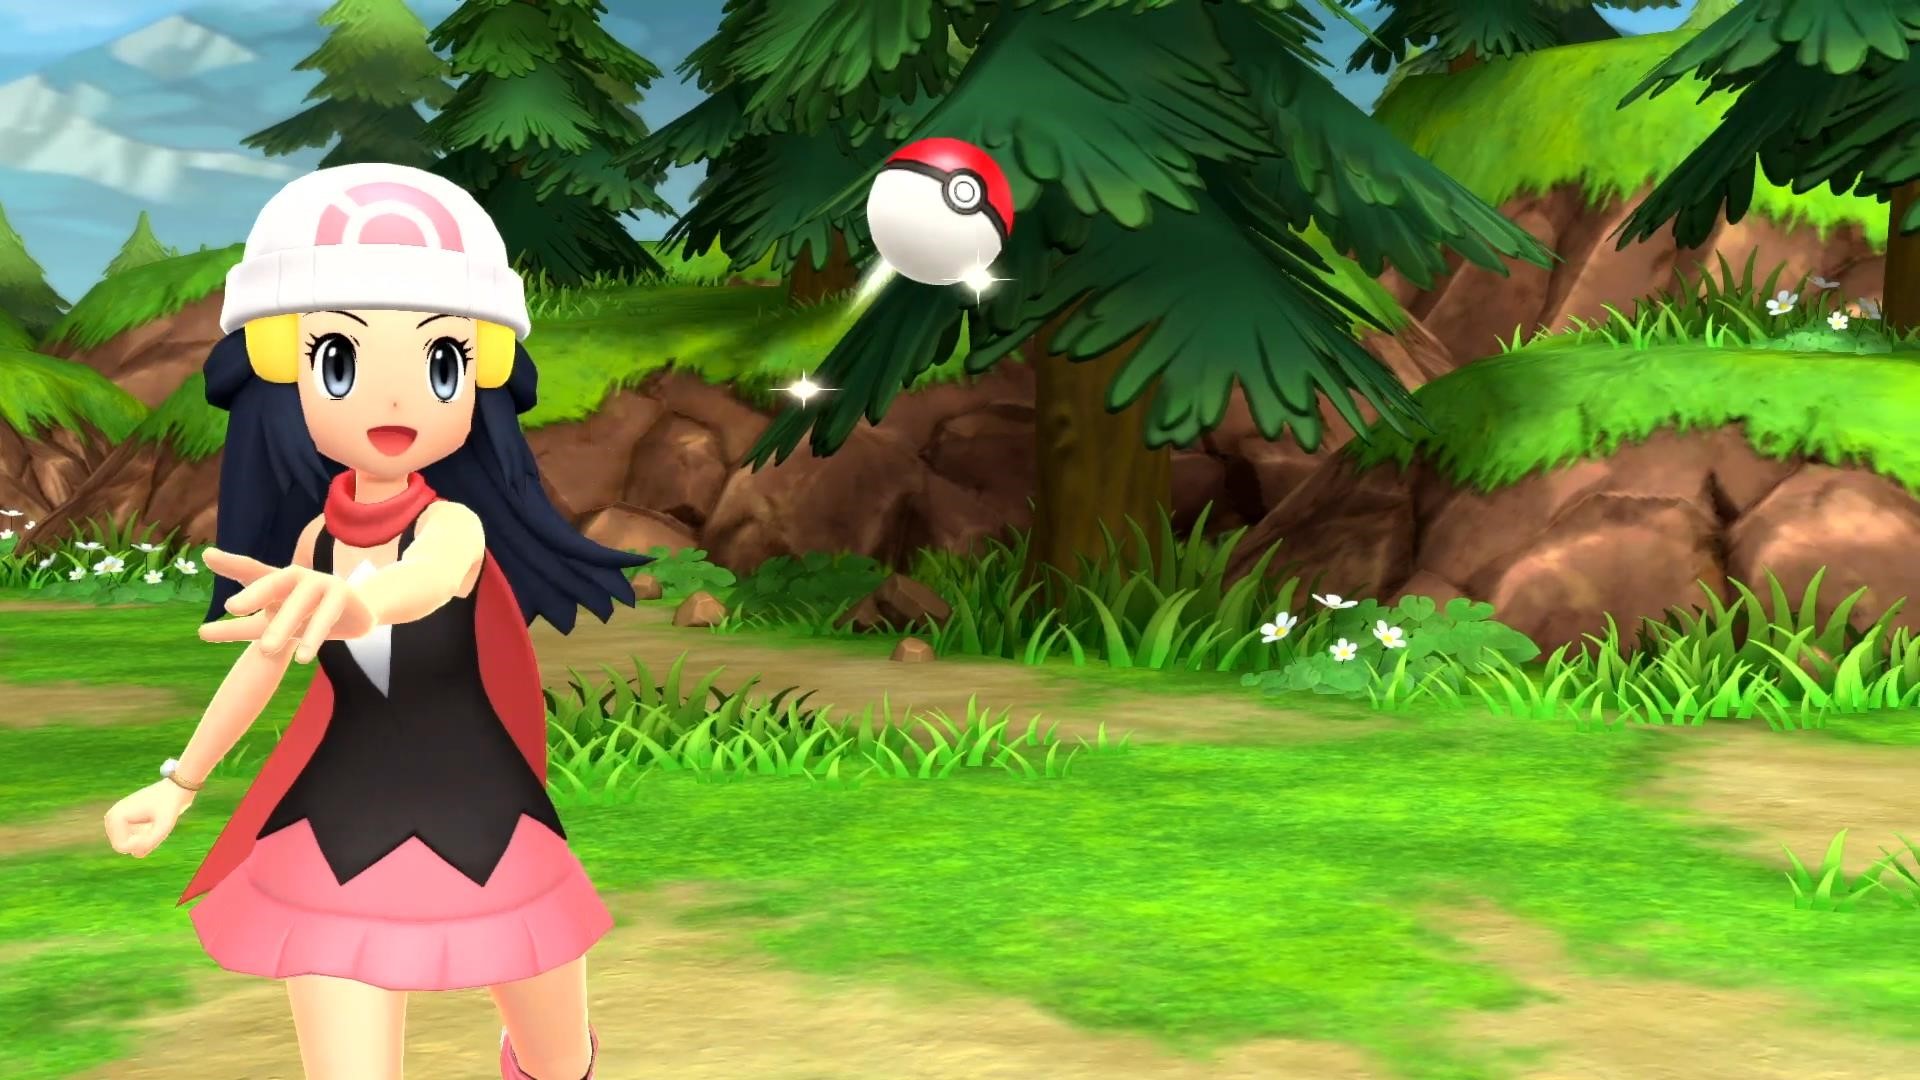 Pokémon Brilliant Diamond and Pokémon Shining Pearl - Assets - The